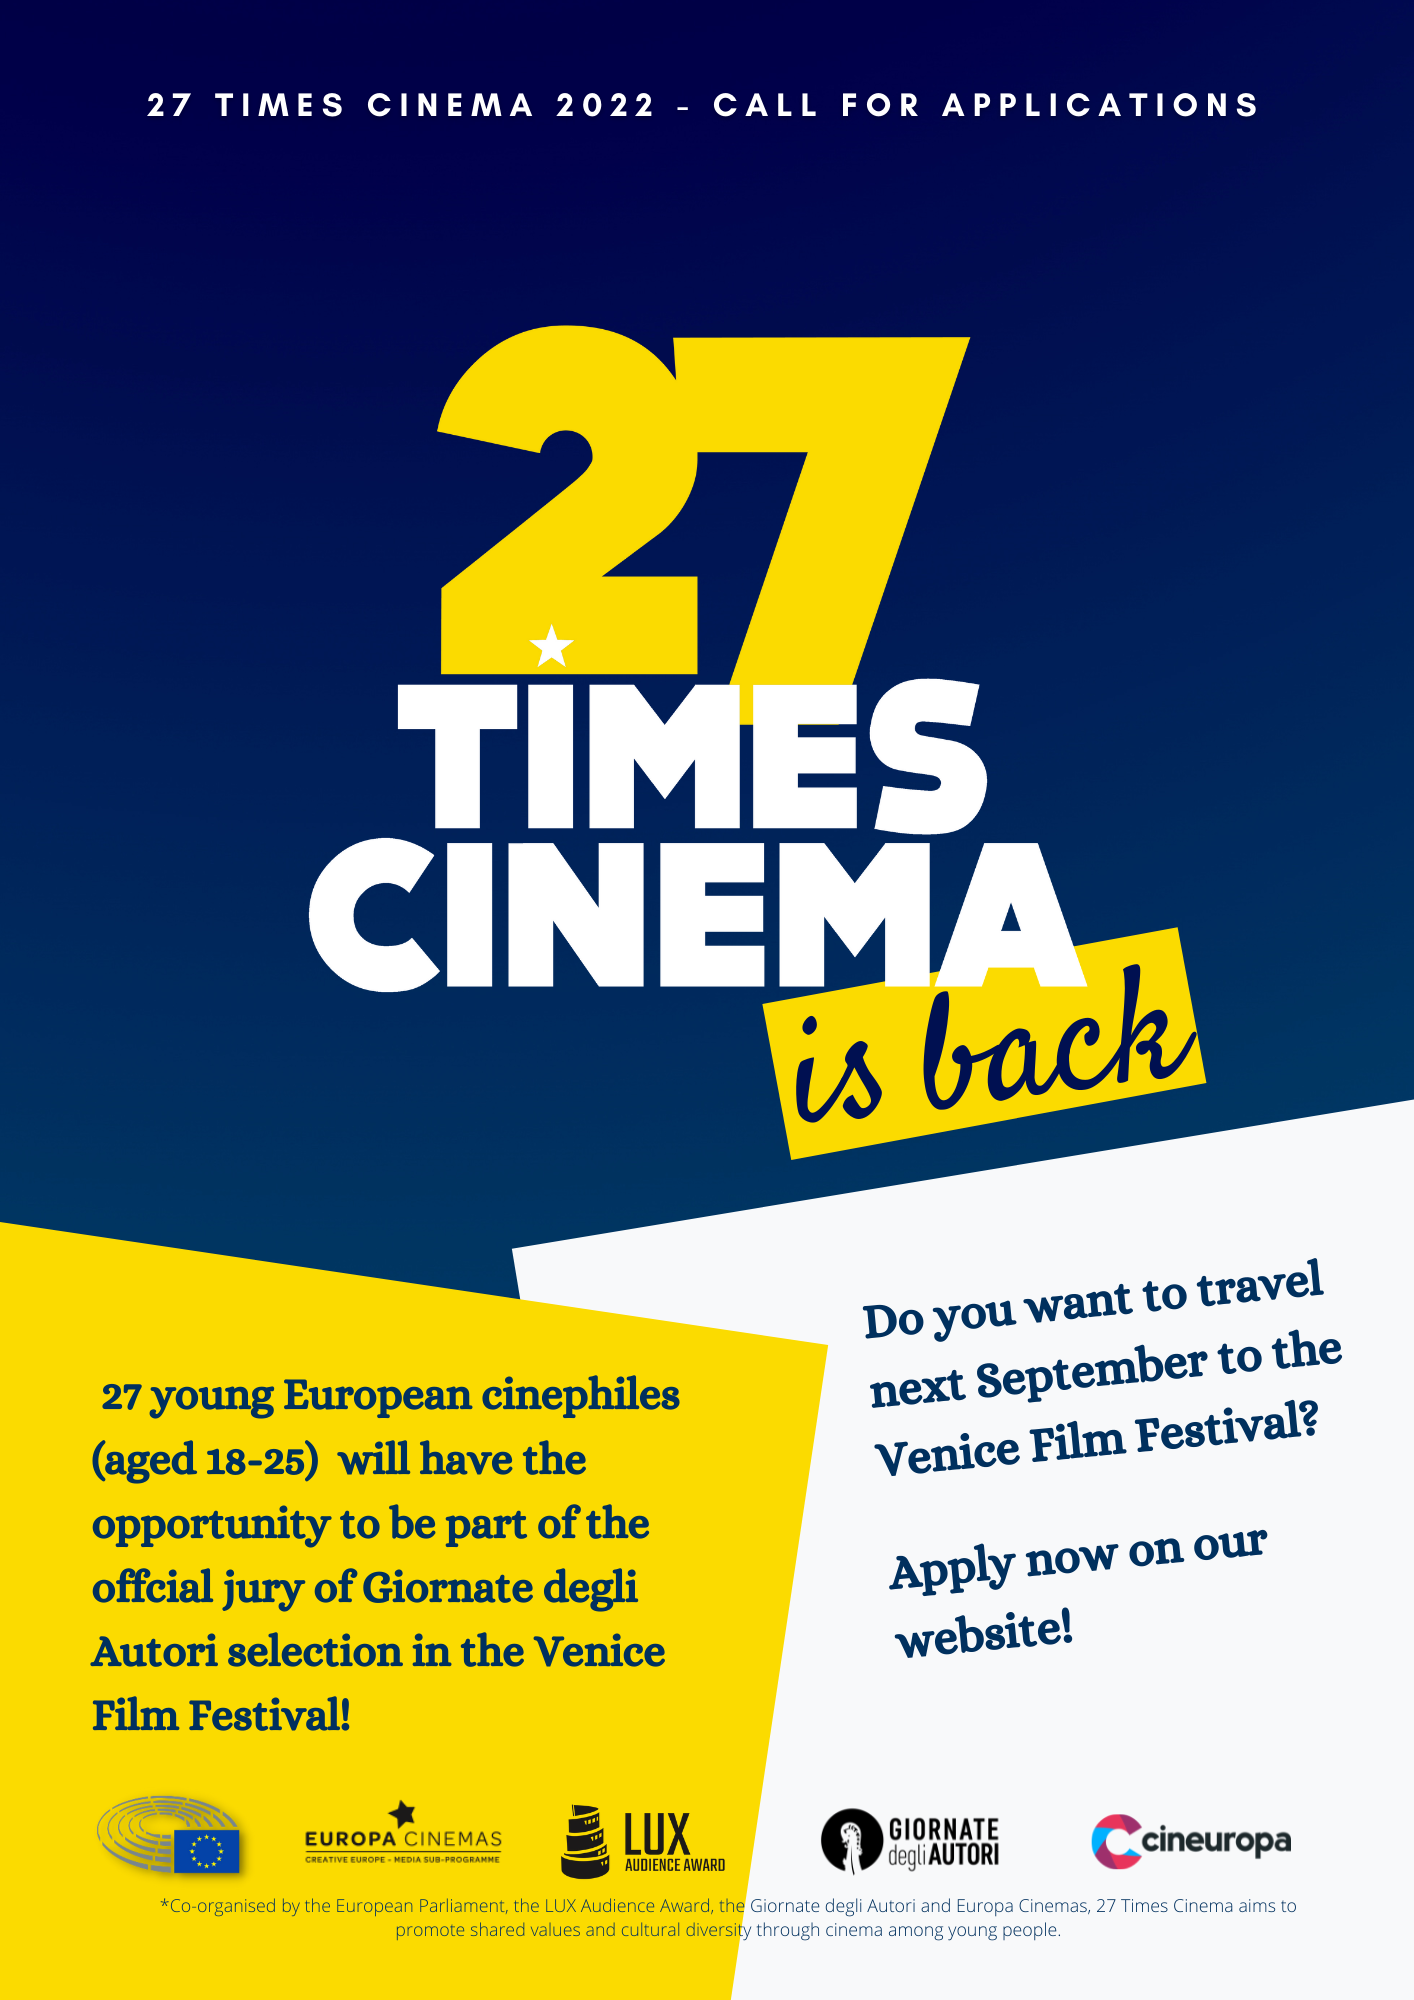 27 times cinema